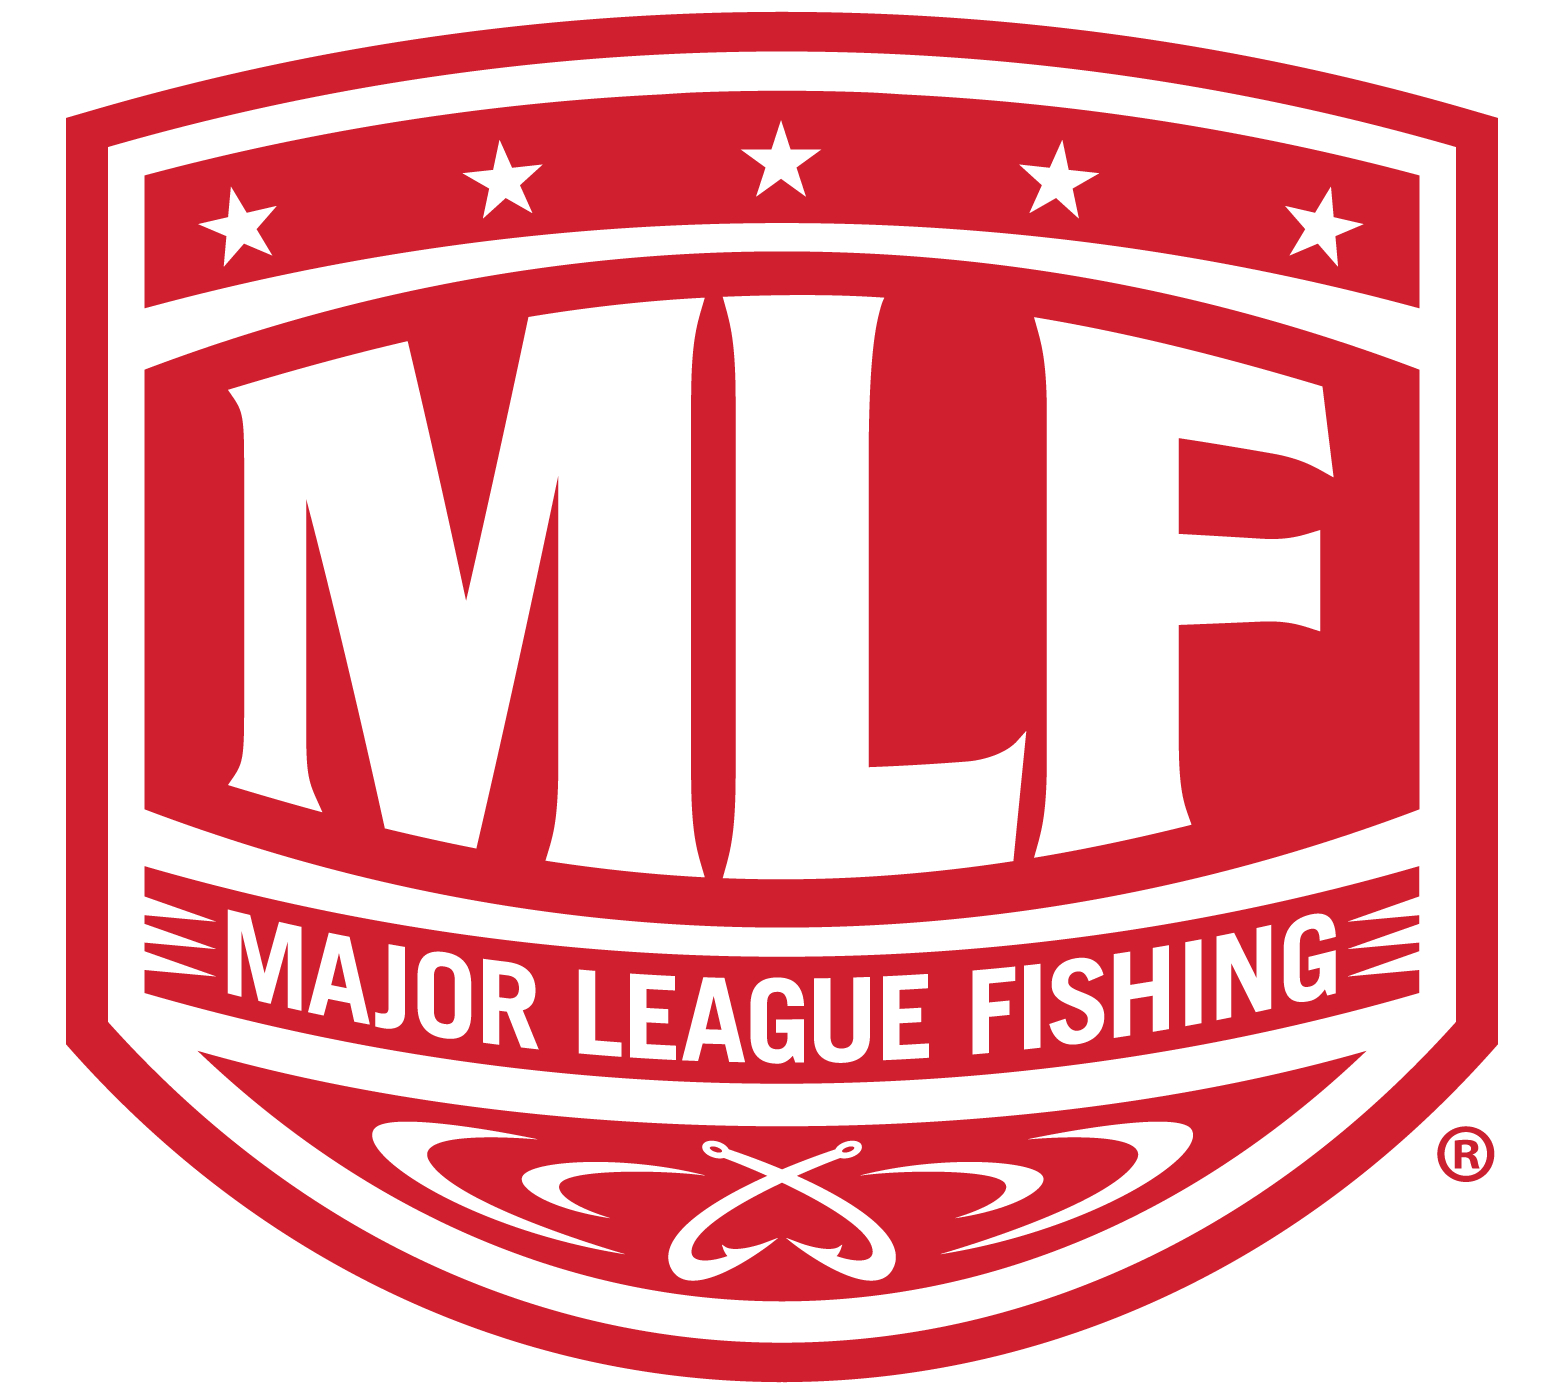 The Realities of Sponsorships - Major League Fishing